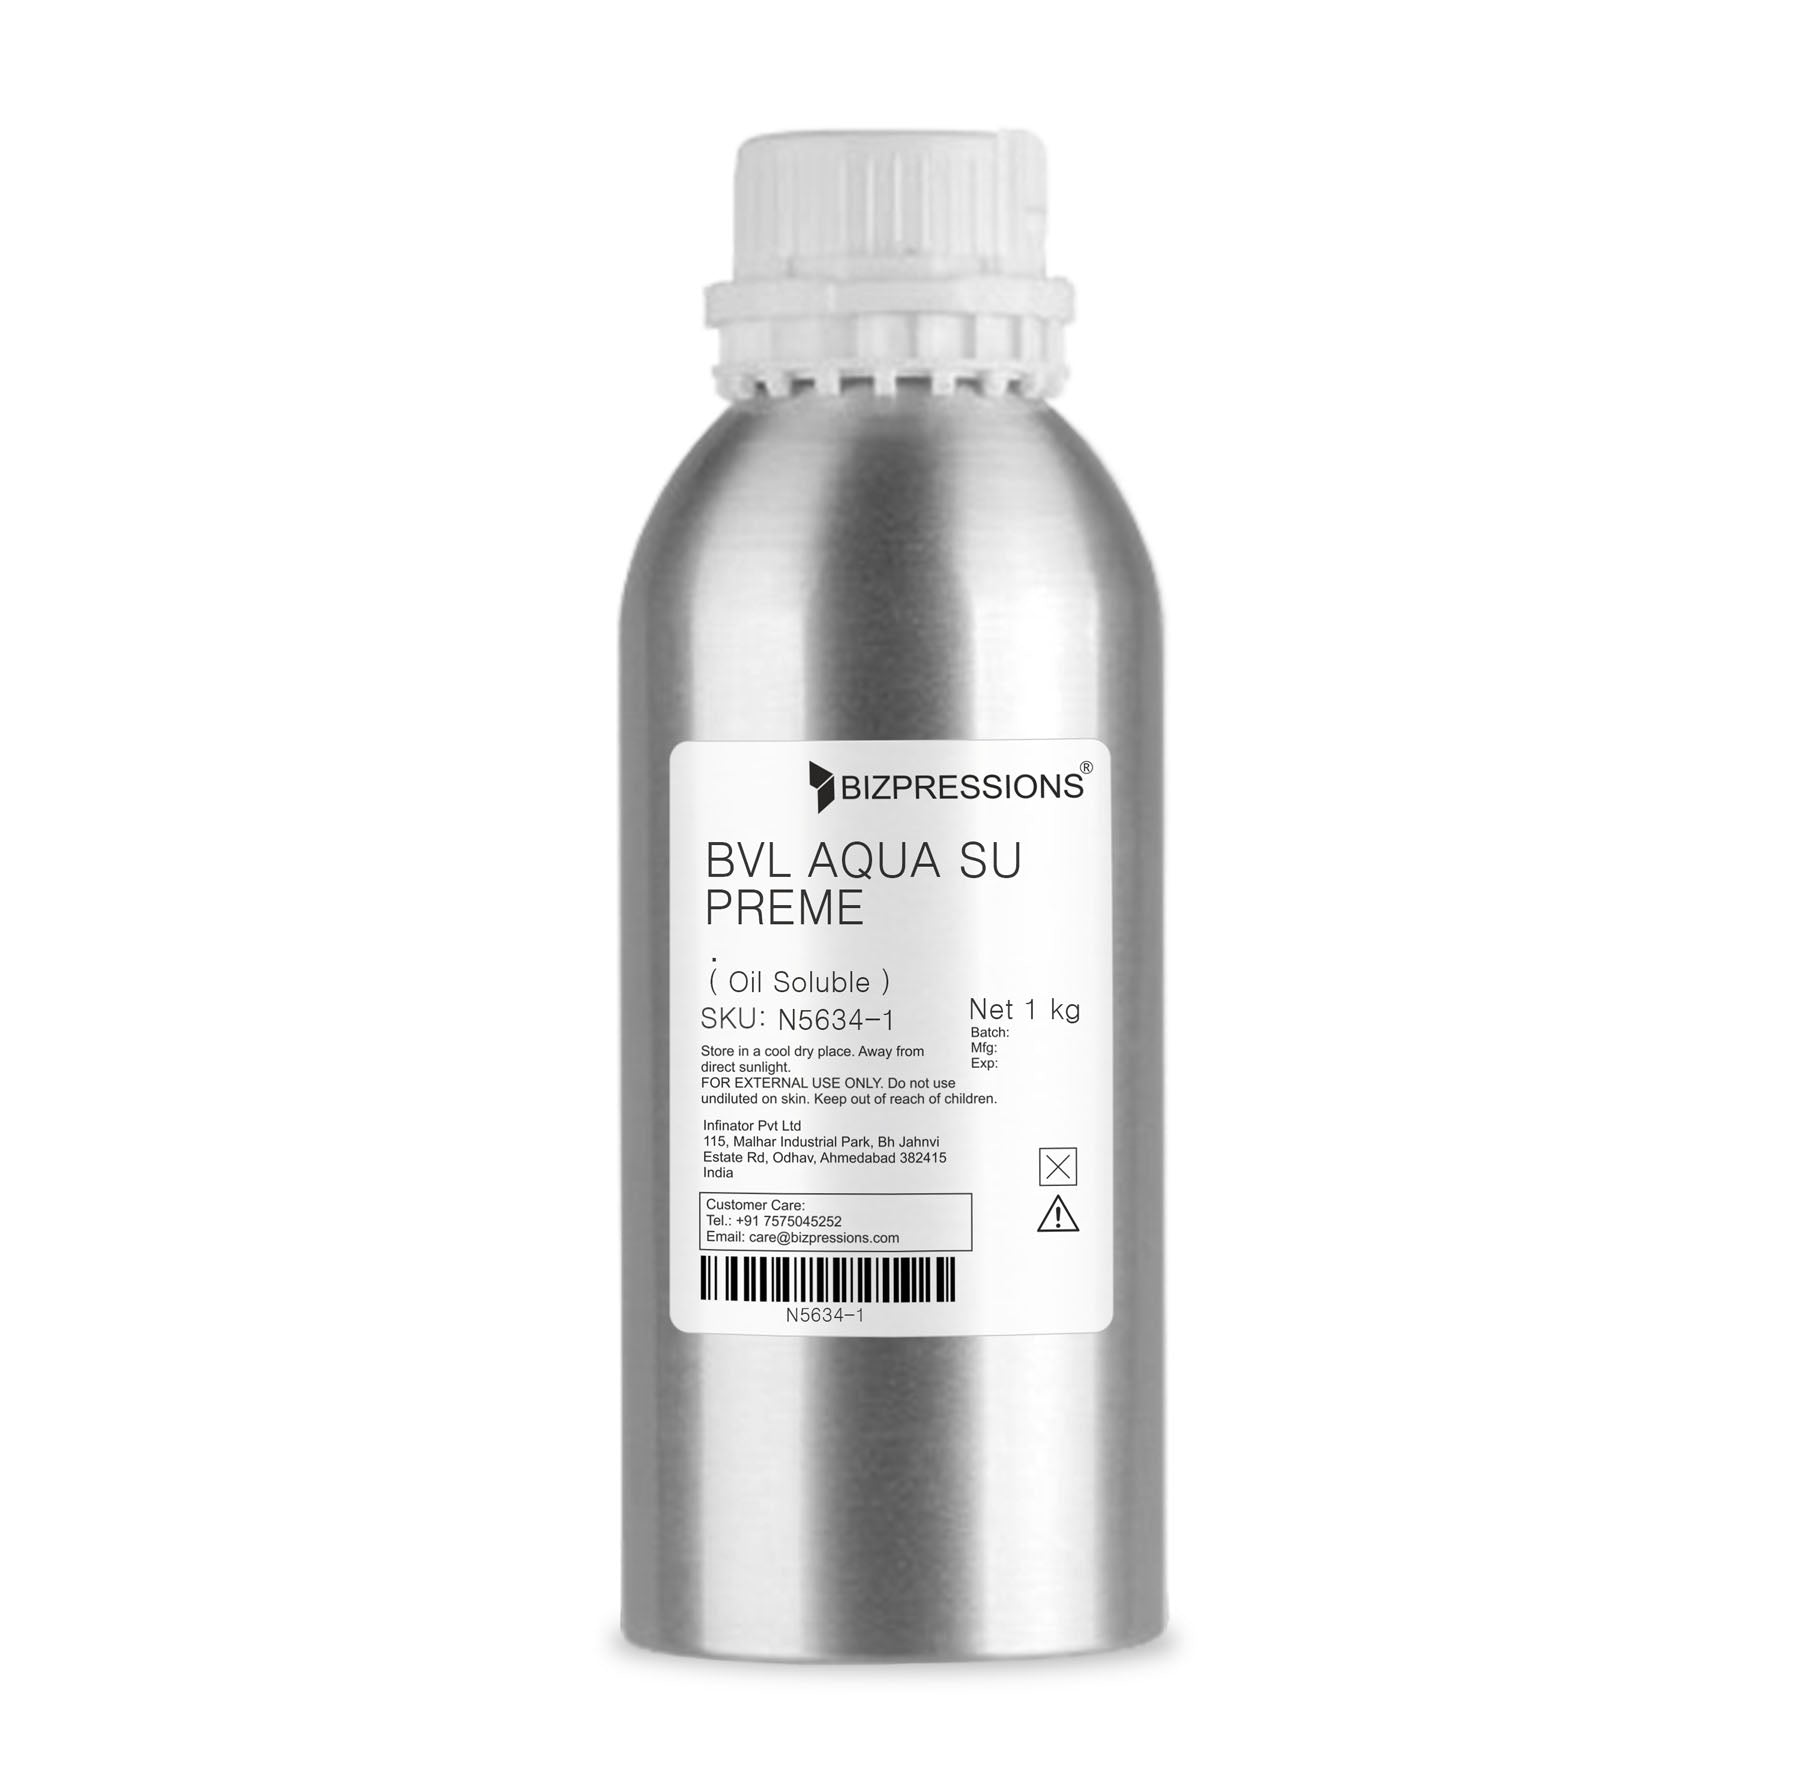 BVL AQUA SUPREME - Fragrance ( Oil Soluble ) - 1 kg